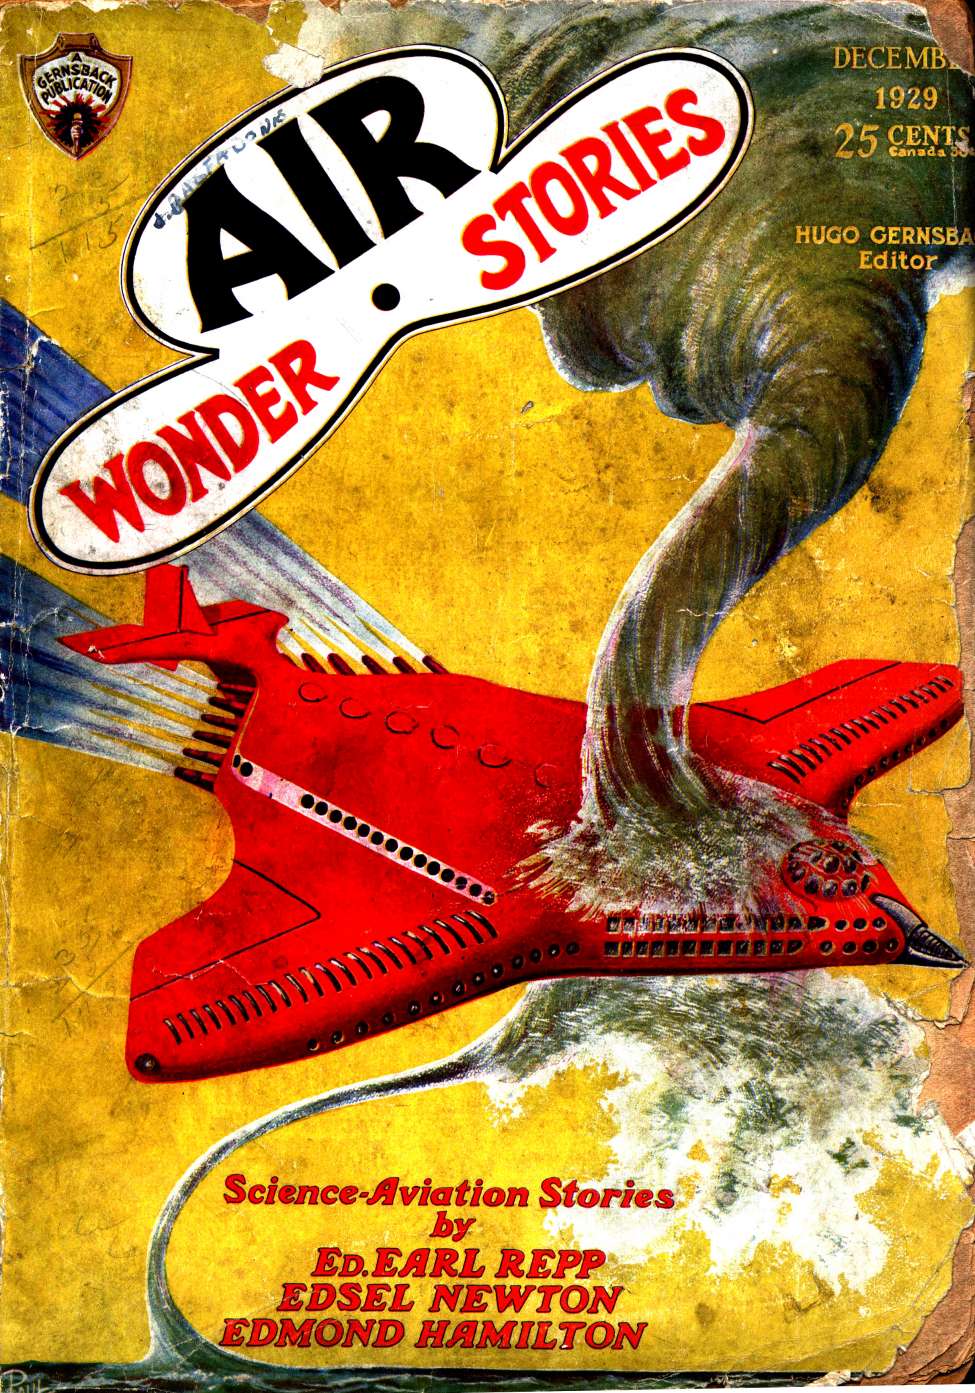 Air wonder. Air Wonder stories (журнал). Эрл rep. The Return of the Air Master, Air Wonder stories March 1930.